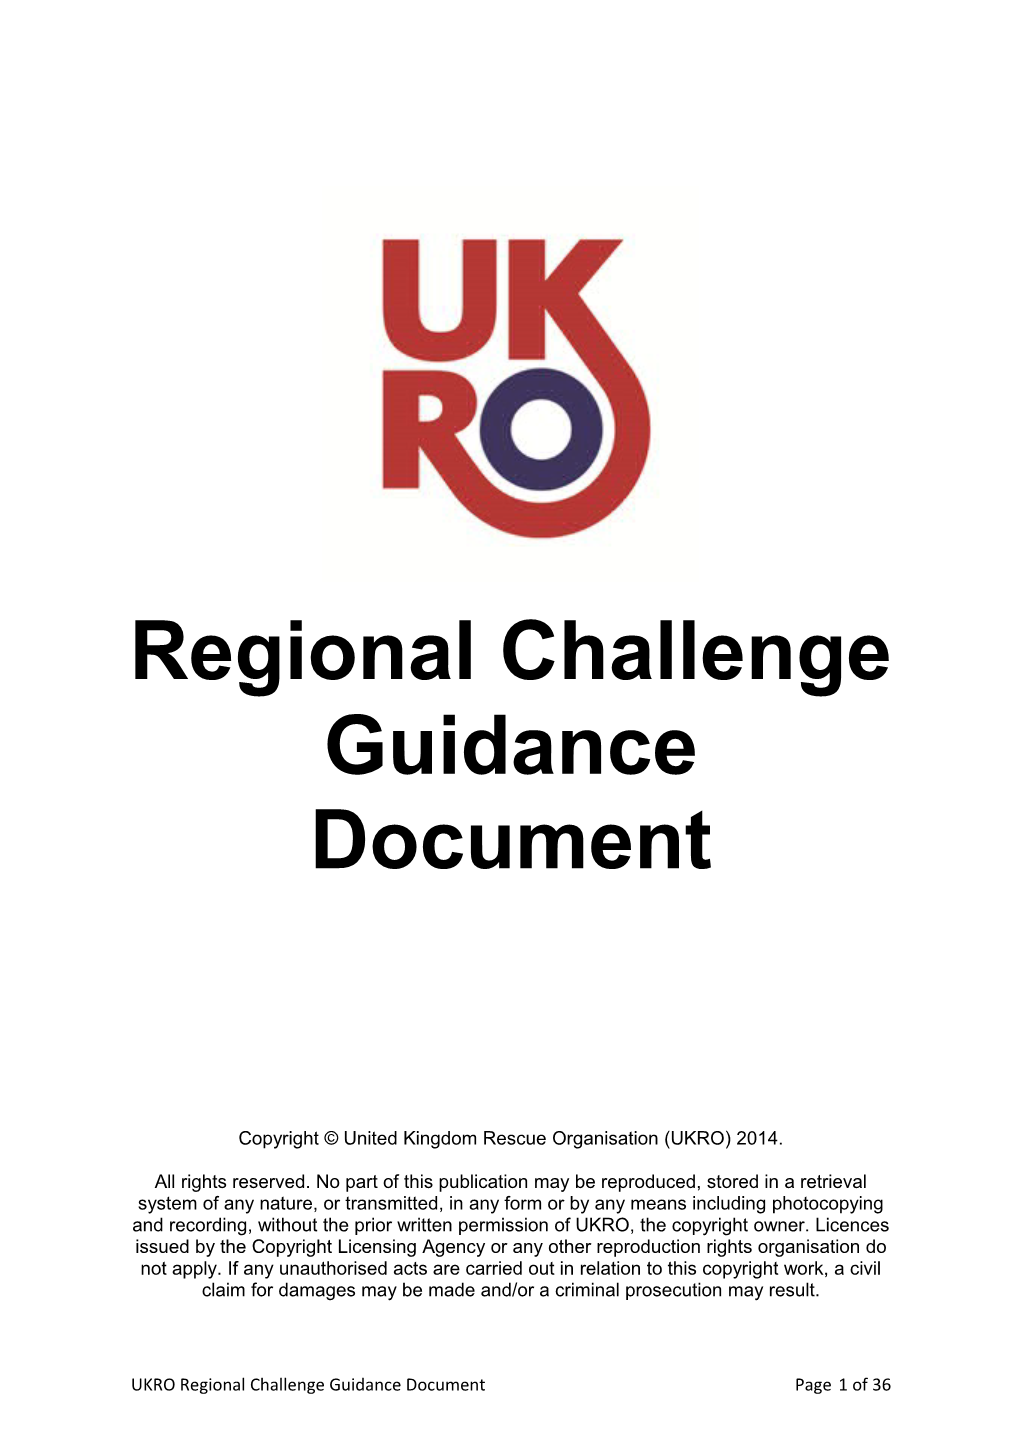 Regional Challenge Guidance Document